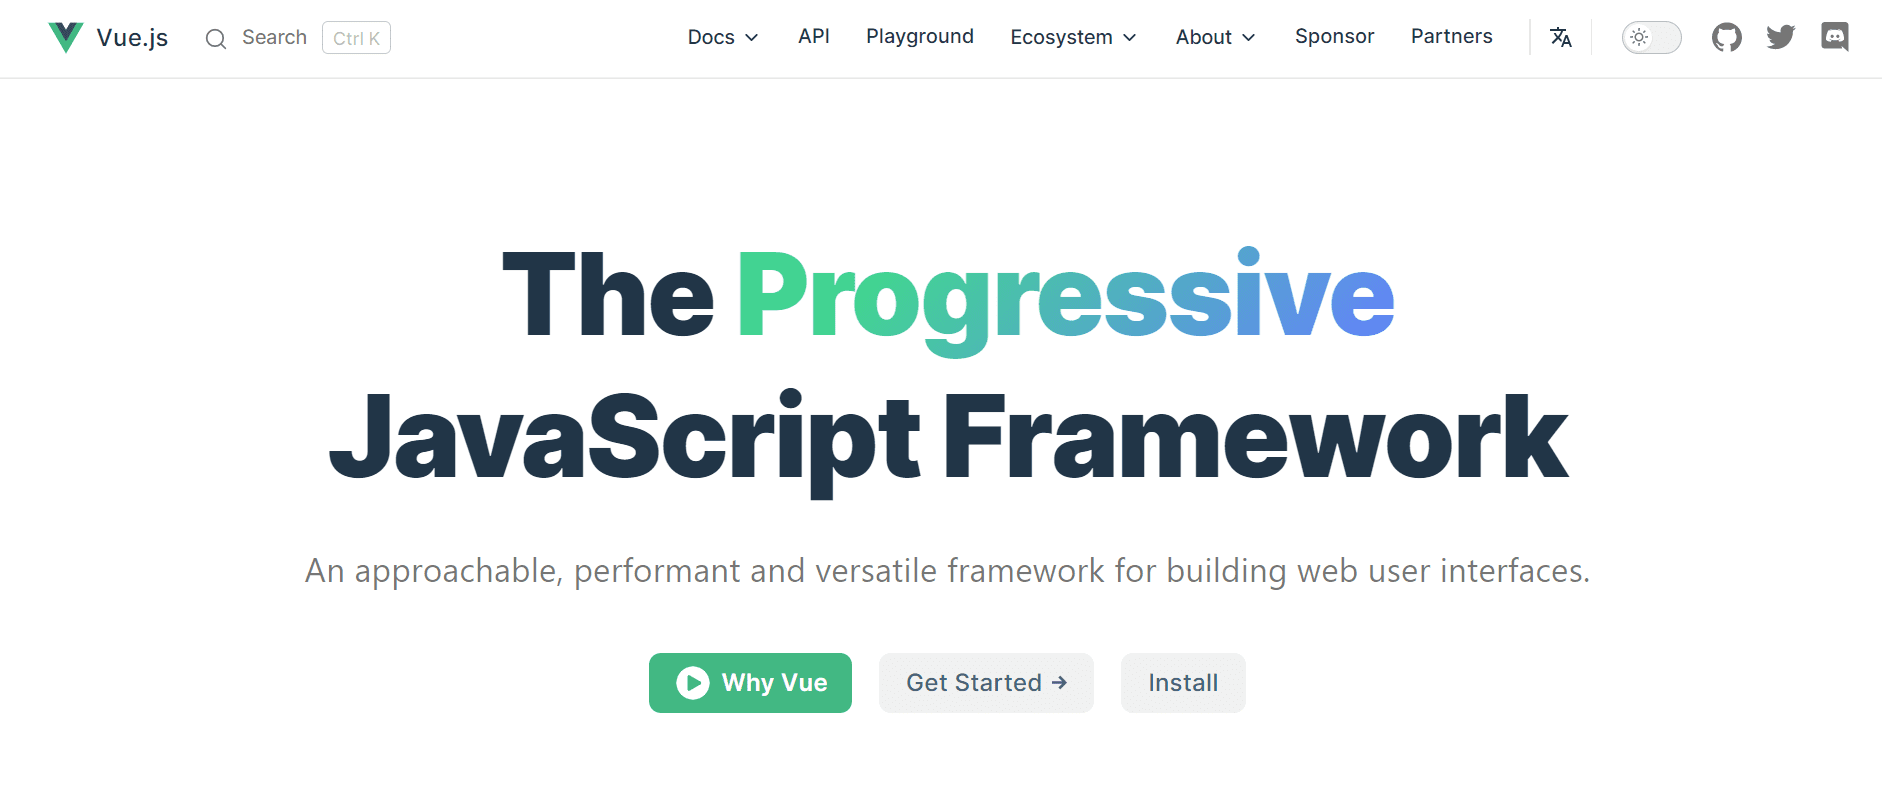 Vuejs: The profressive javascript framework